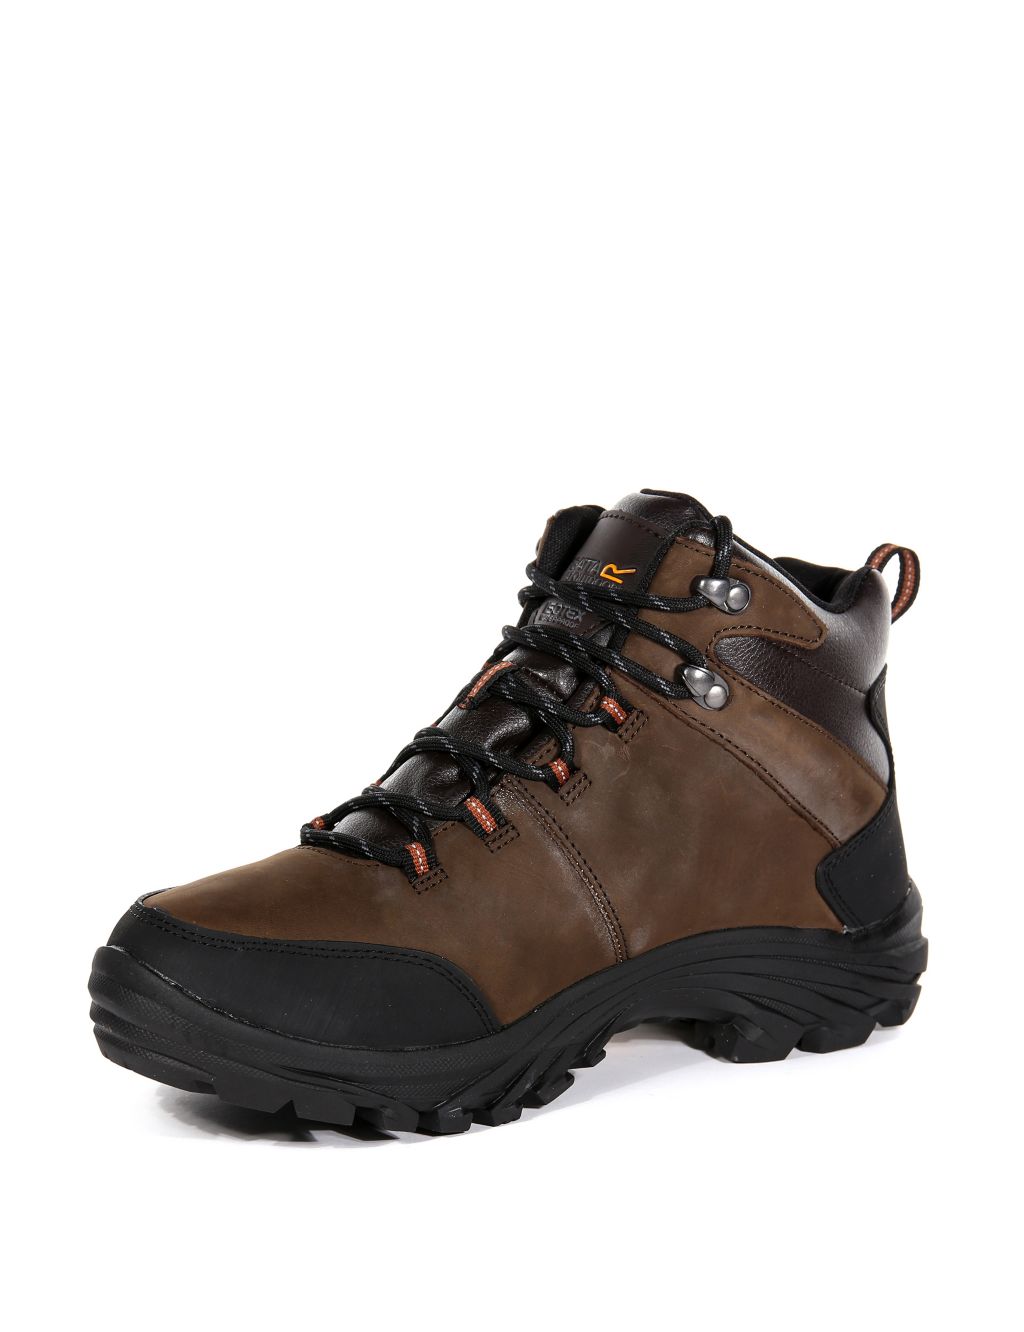 Burrell Leather Waterproof Walking Boots image 4